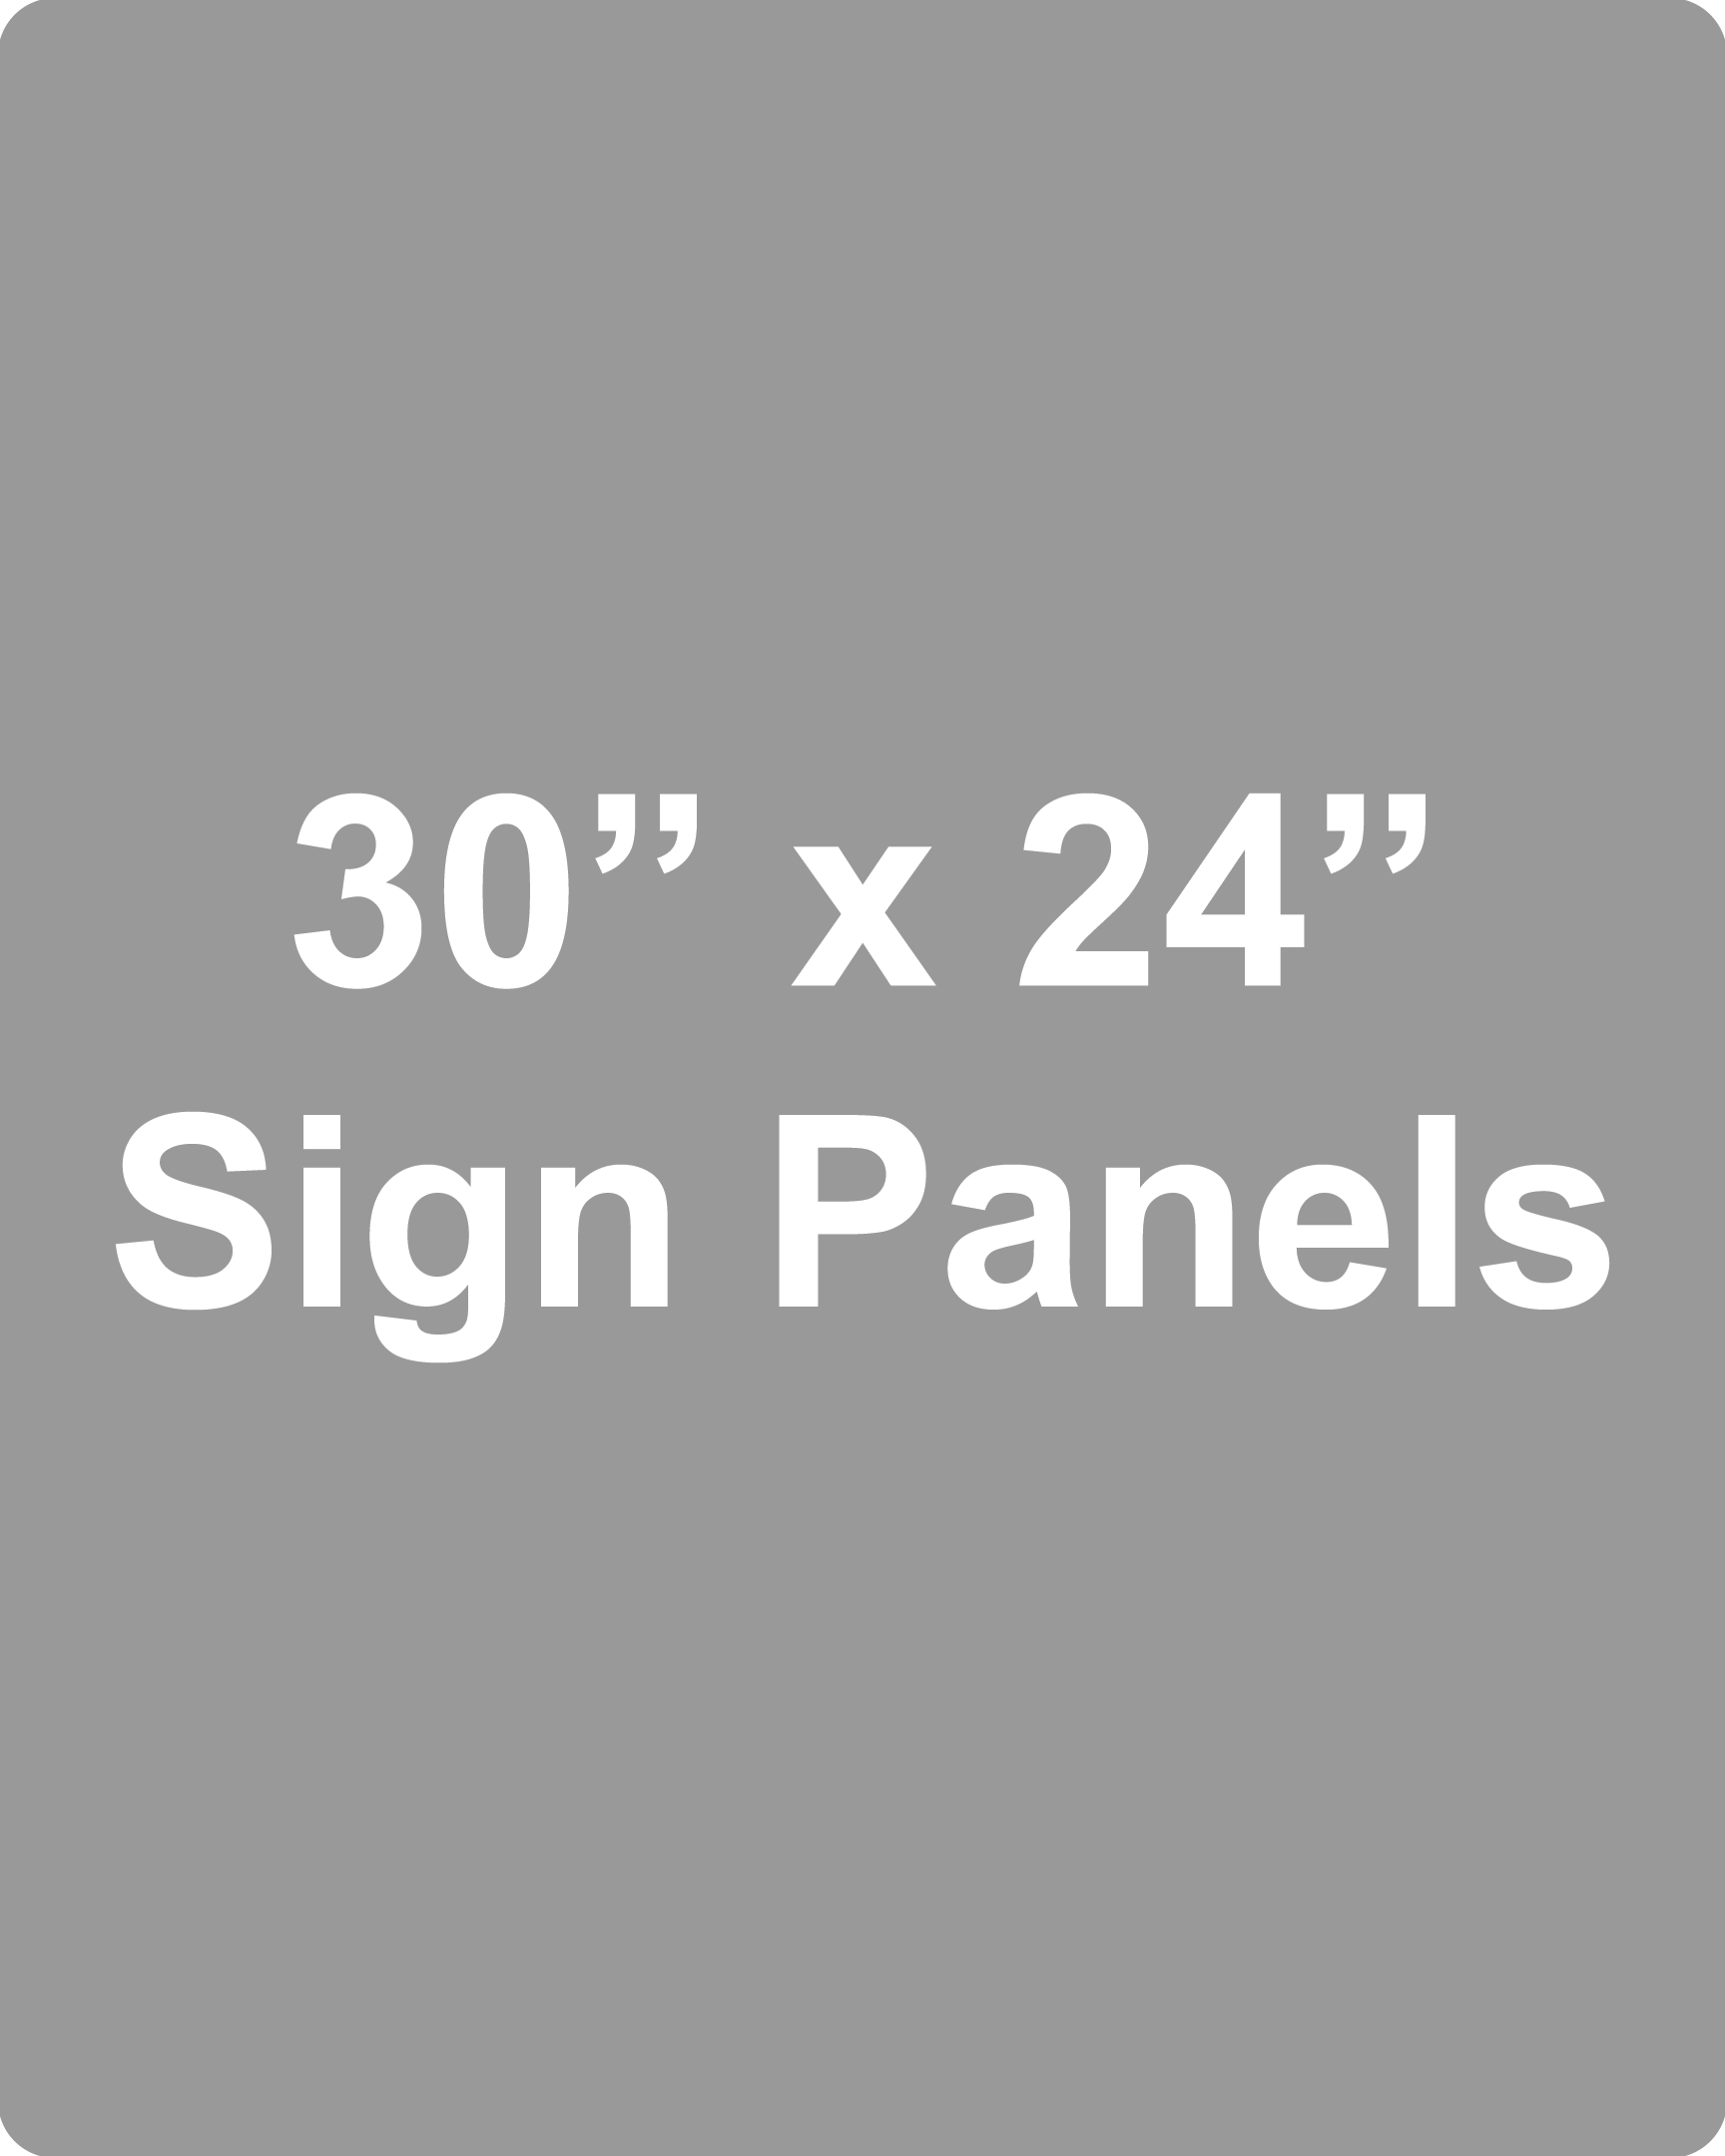 30 x 24 Sign Panels